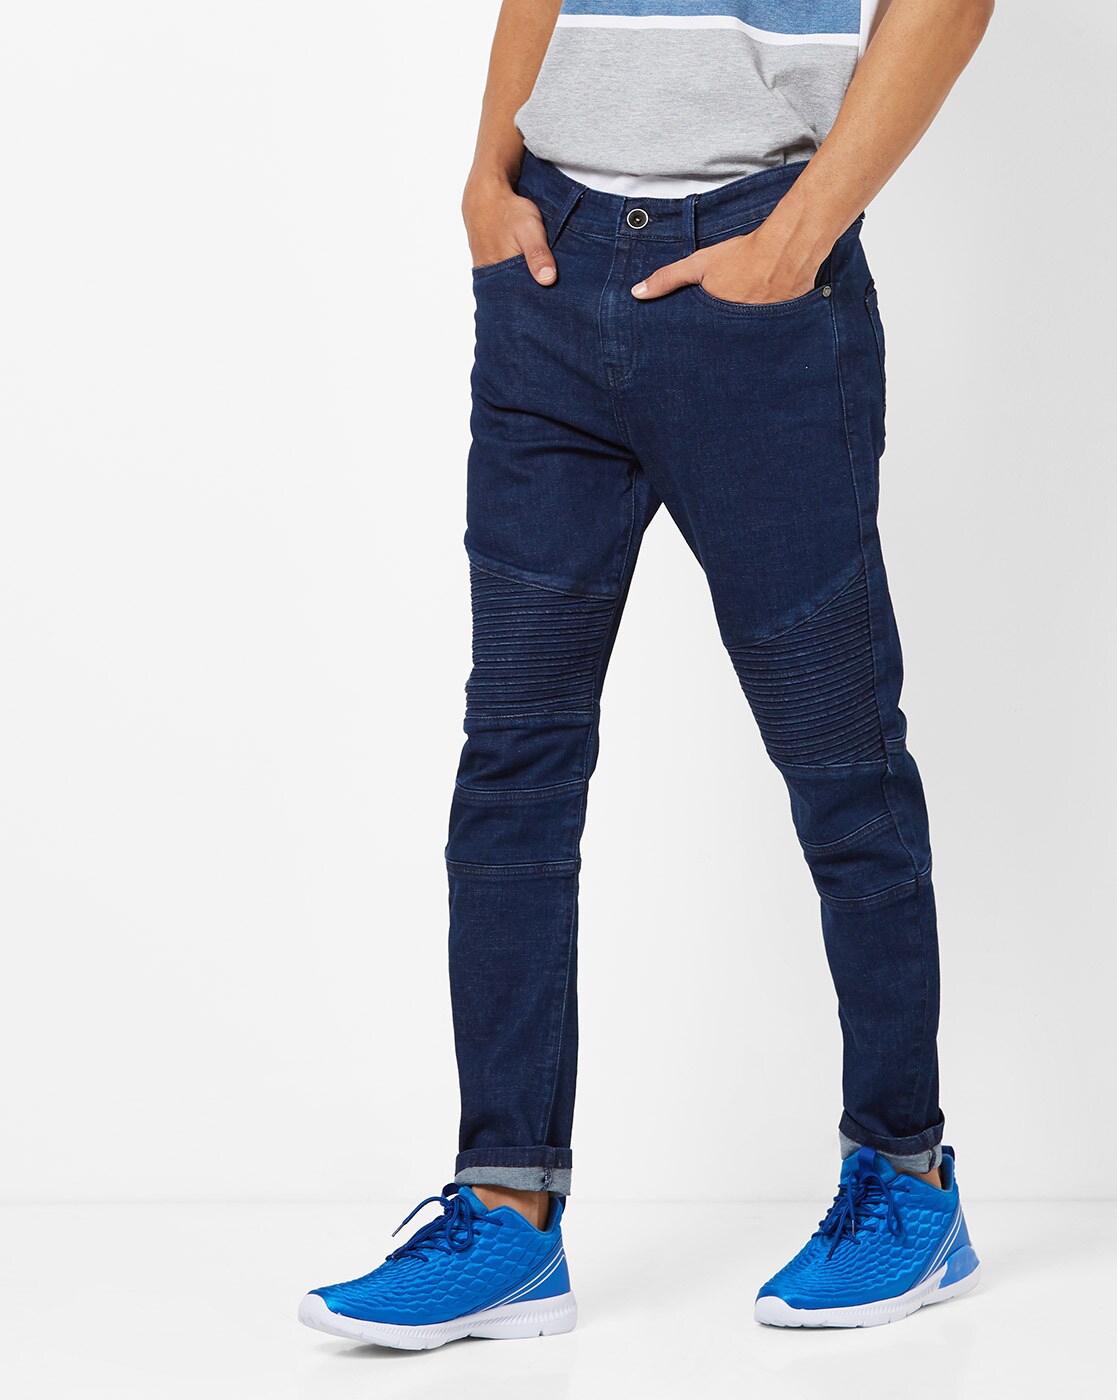 navy blue jeans mens